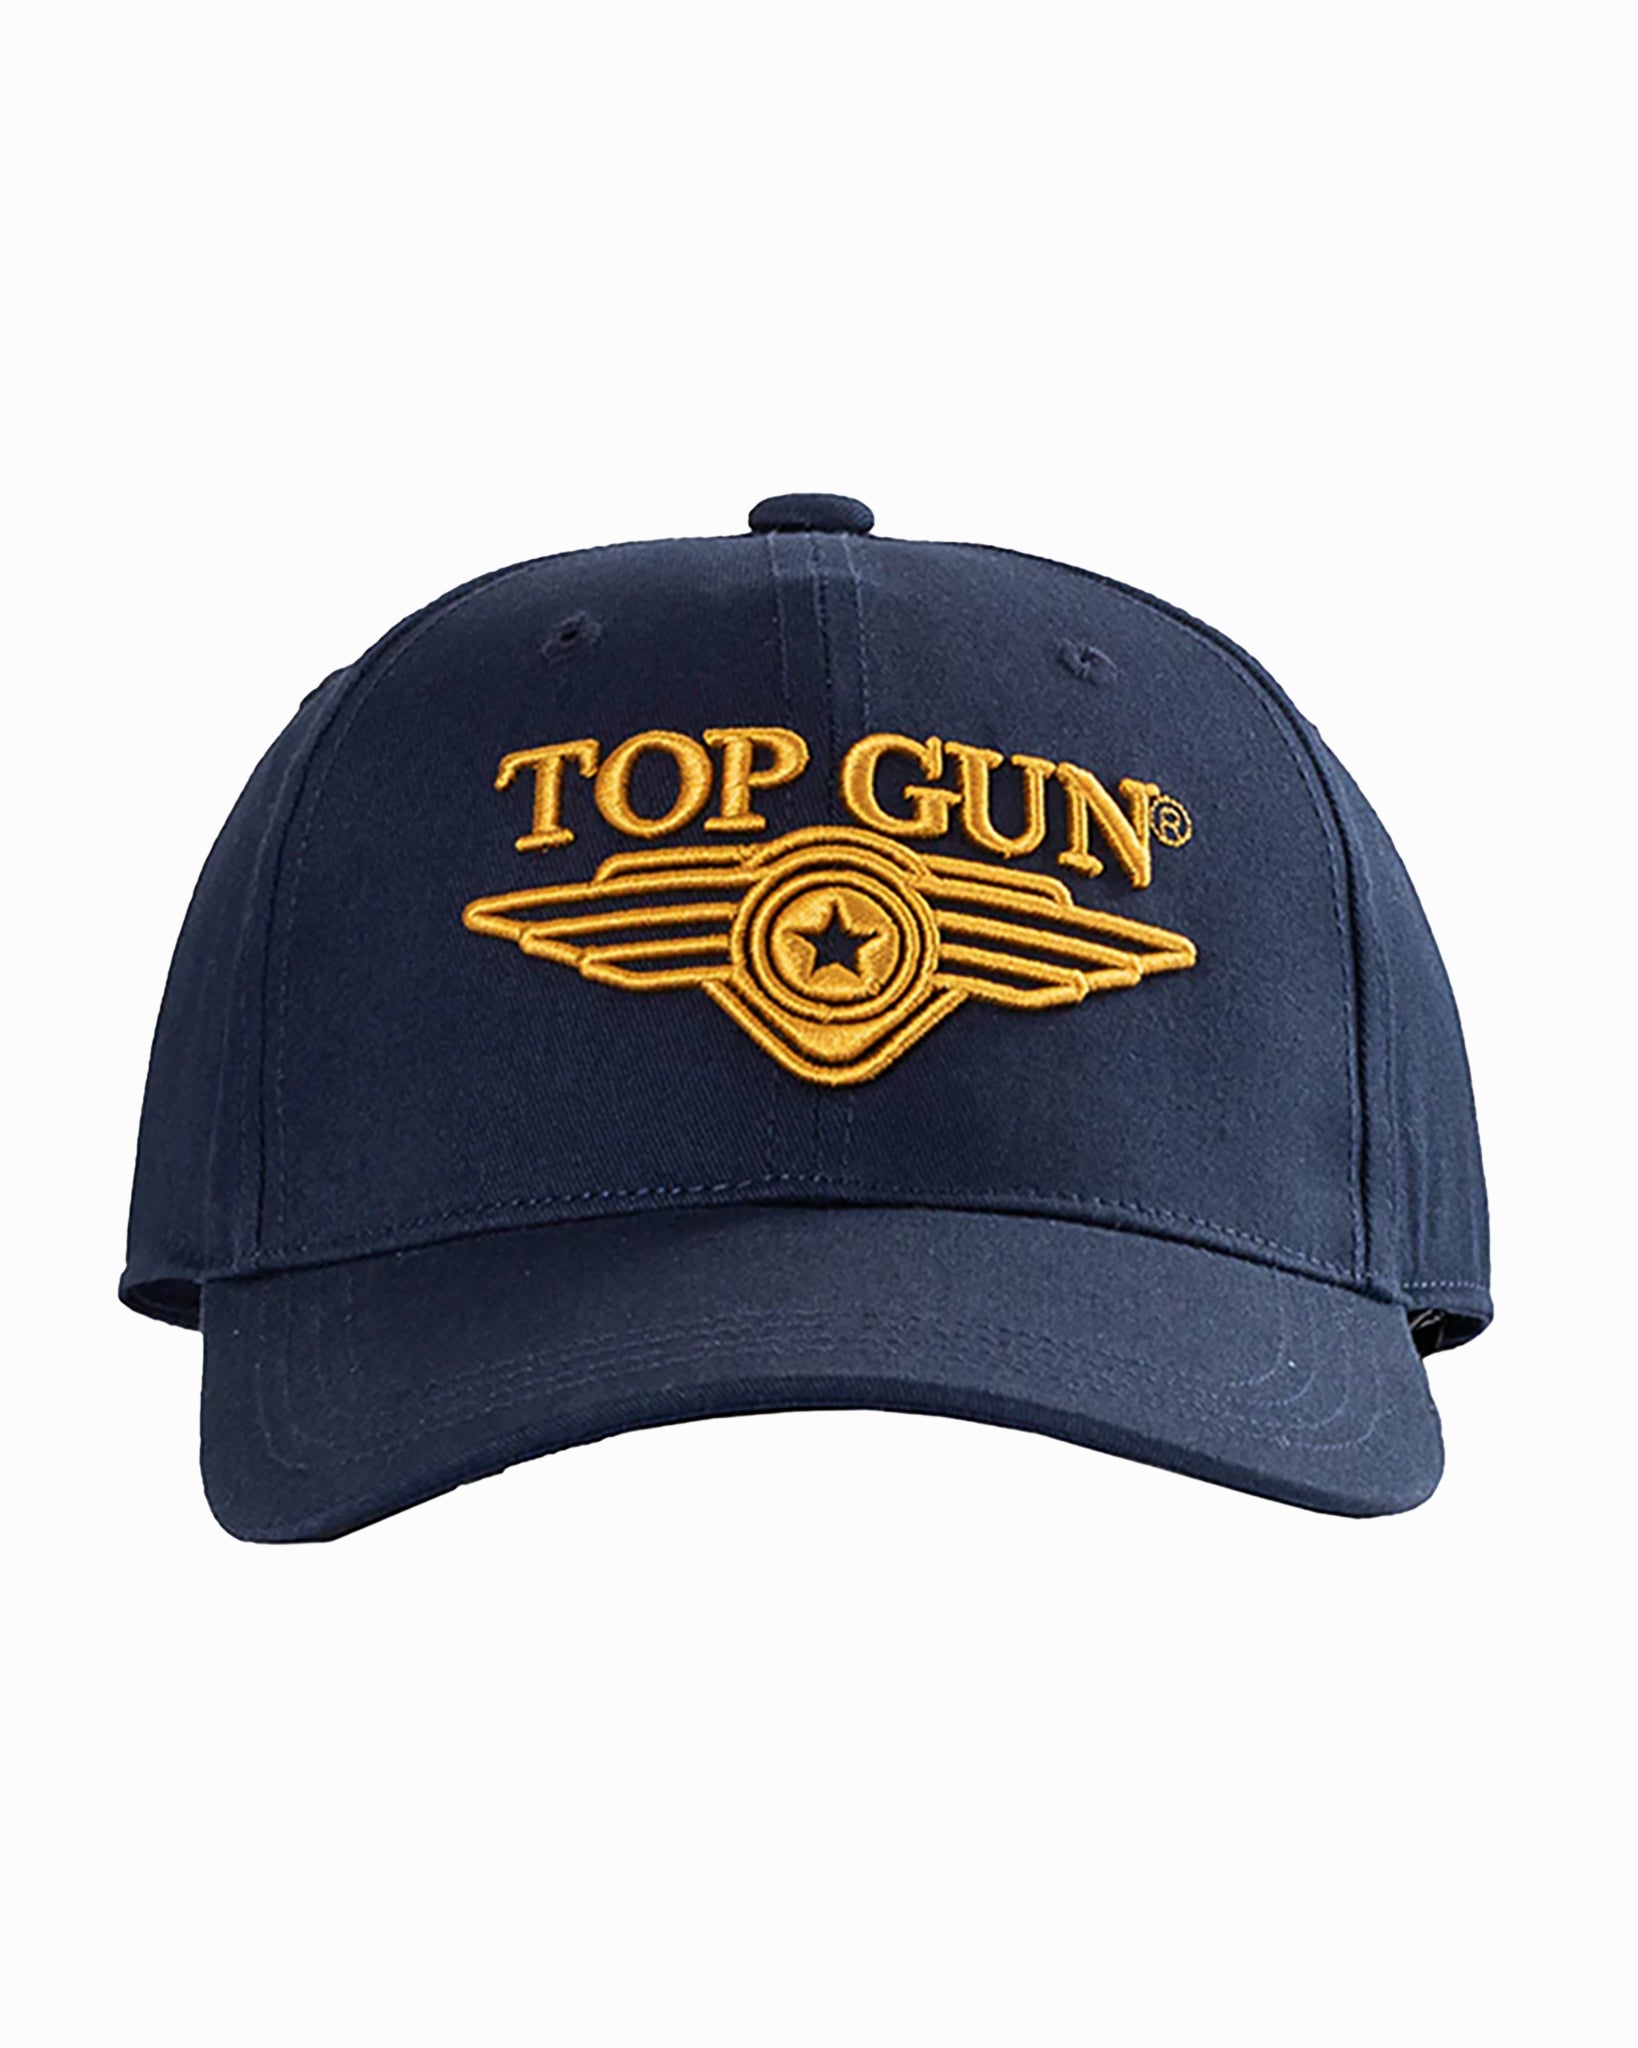 More – Beanie, Hat, Cap, and Store Gun Top Trucker | Gun: | Store Official Top Caps Maverick